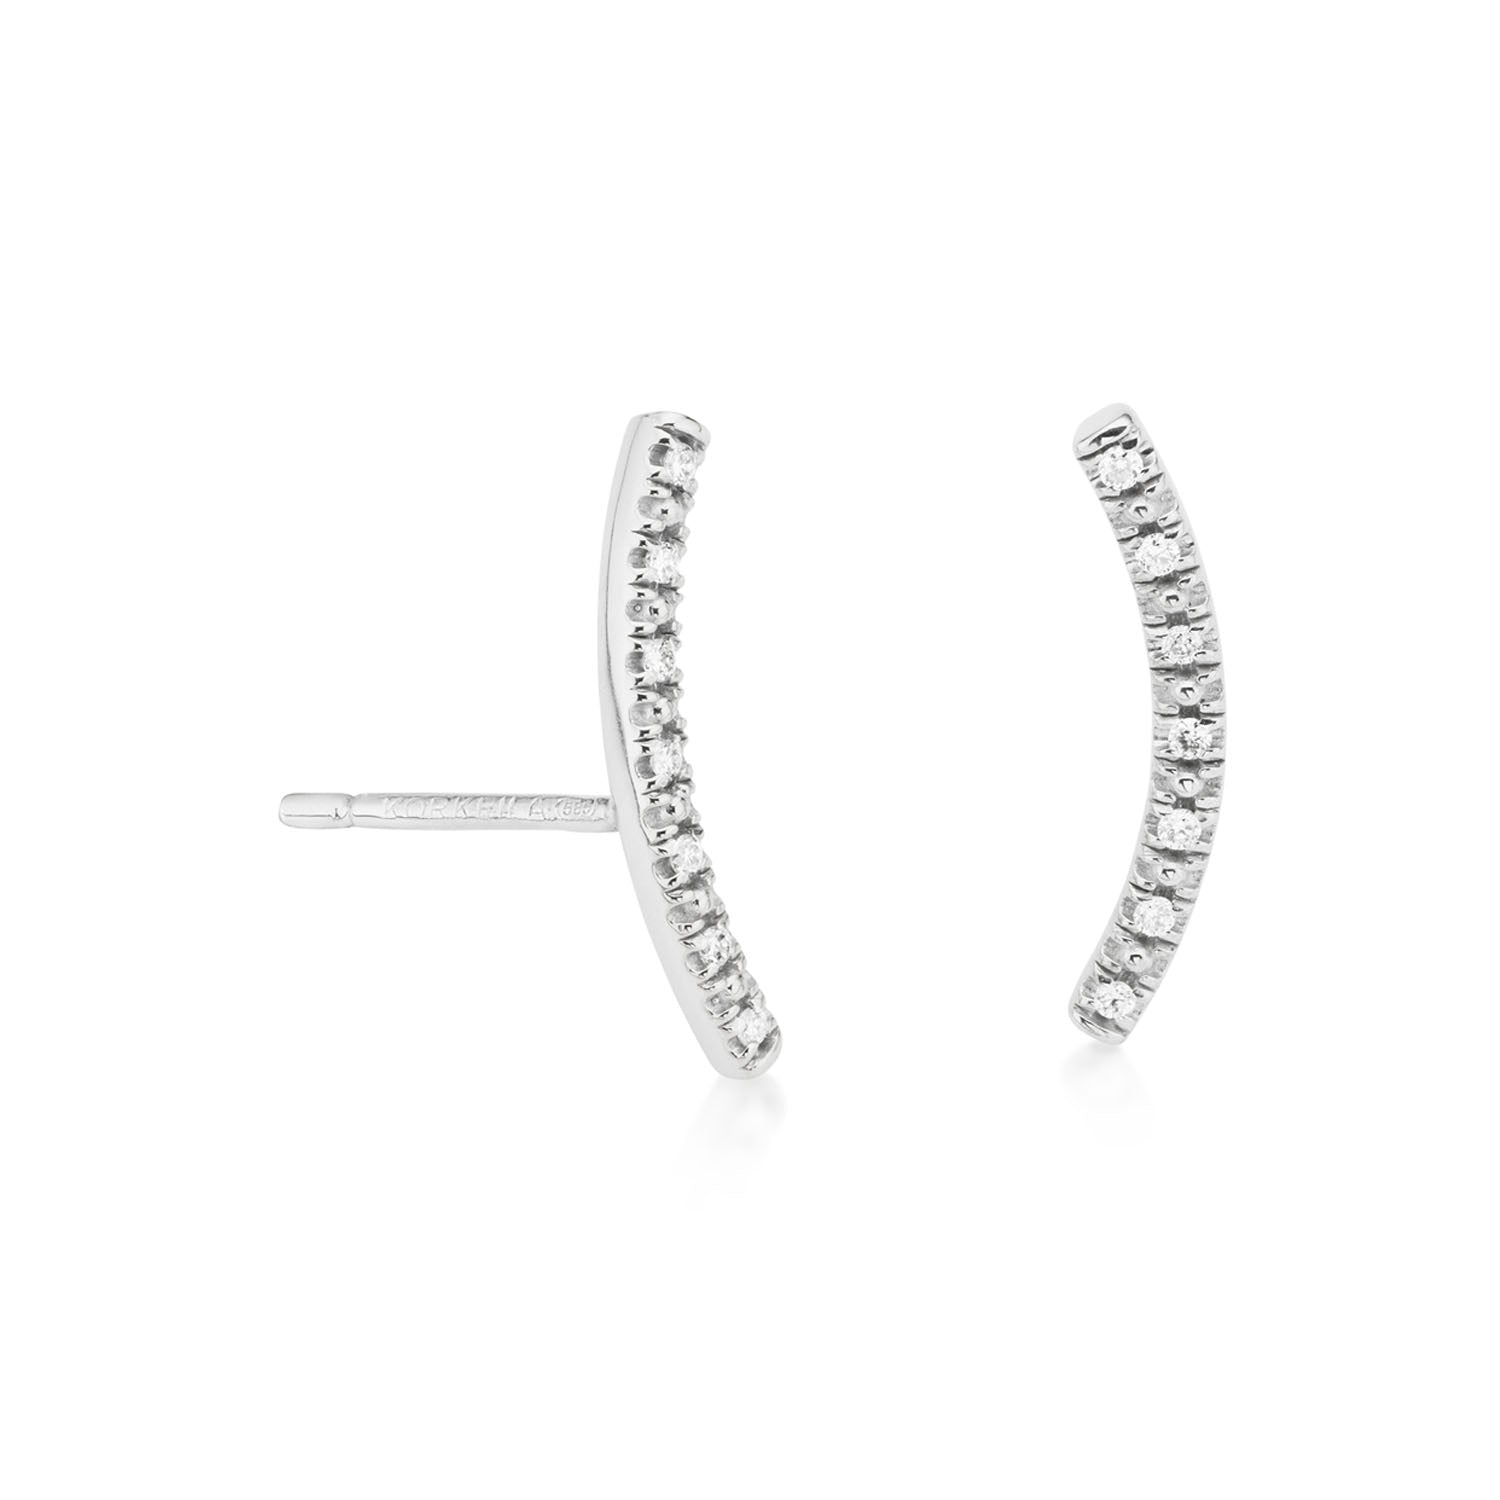 Sola - diamond earrings